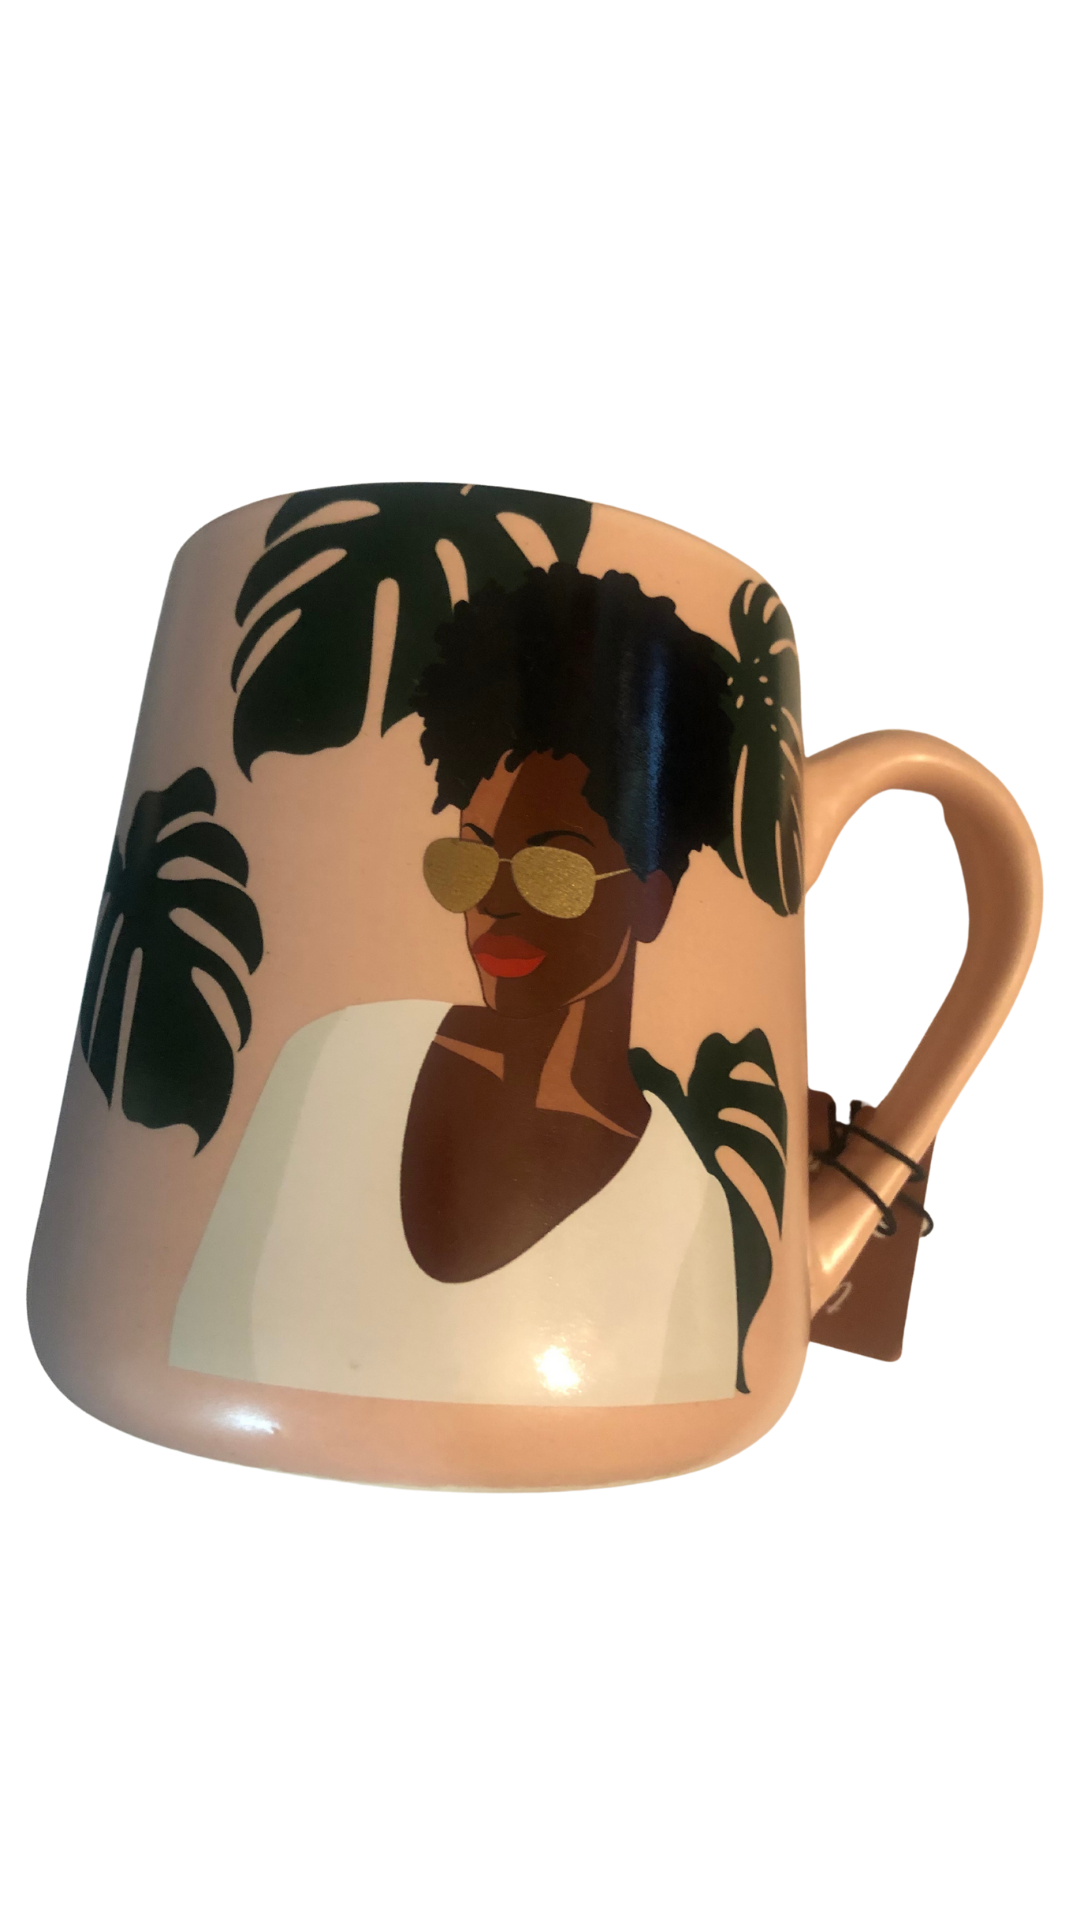 Andrea Black Women Coffee Tea Mug Cup